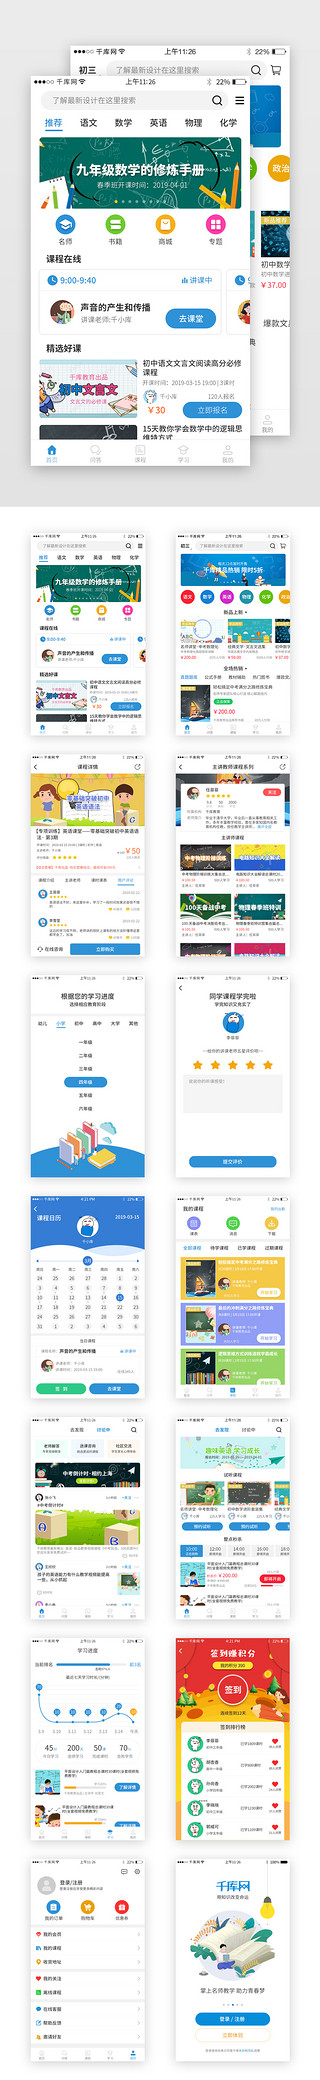 ppt模板黄蓝UI设计素材_蓝色系教育培训app界面模板套图